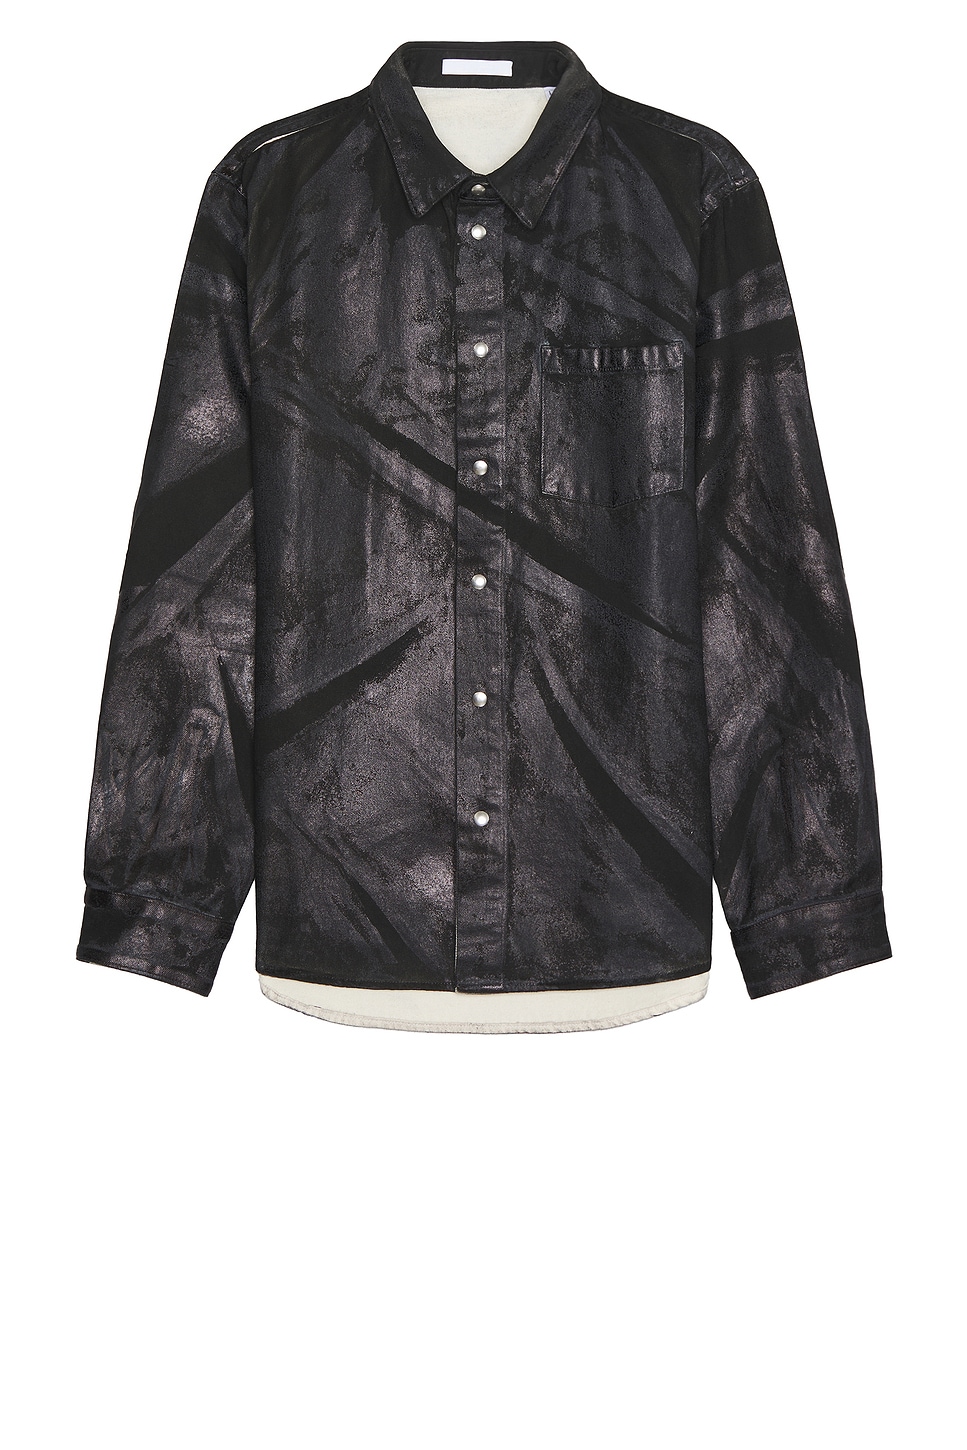 Image 1 of Helmut Lang Shirt Jacket in Black Distress Metal Crash